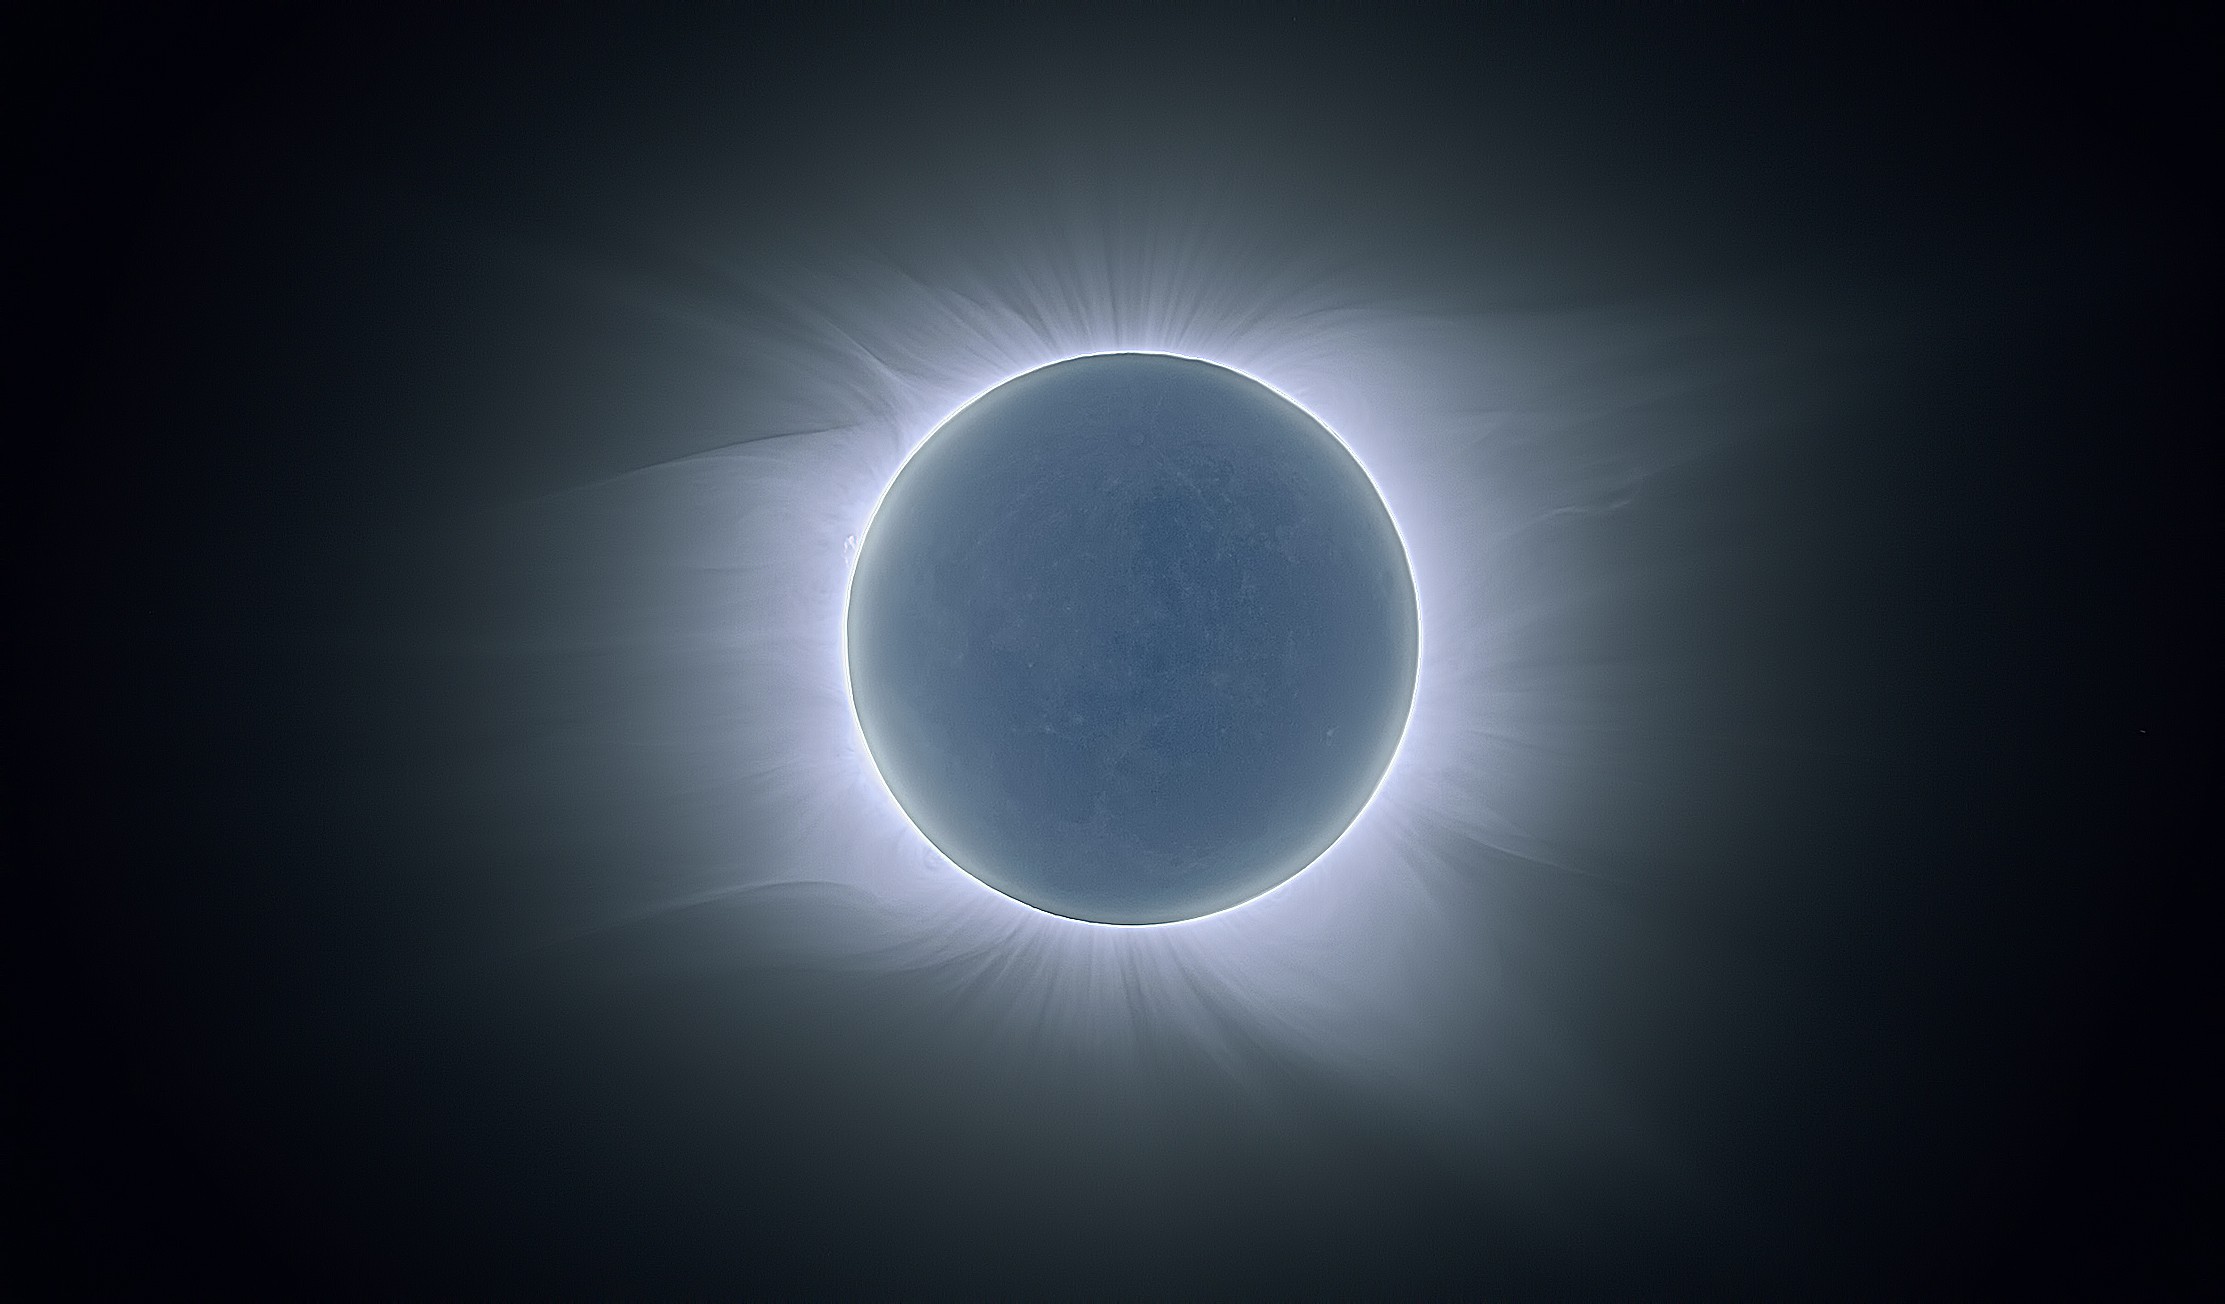 outer space, planets, solar eclipse - desktop wallpaper